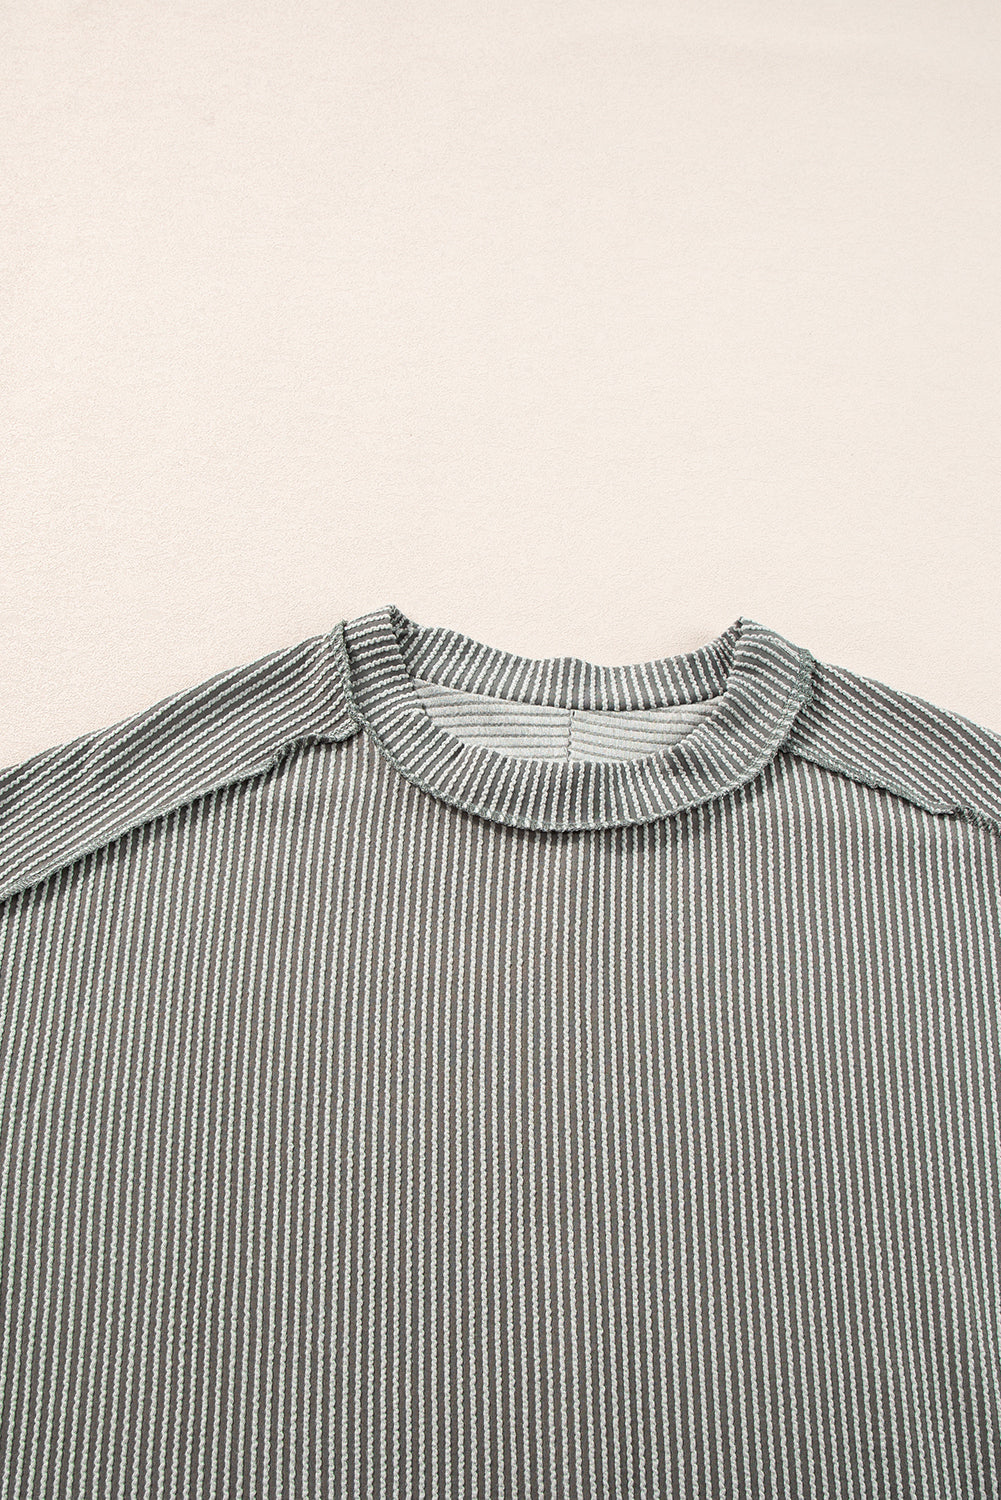 Medium Grey Textured Knit Exposed Stitching T-shirt-7